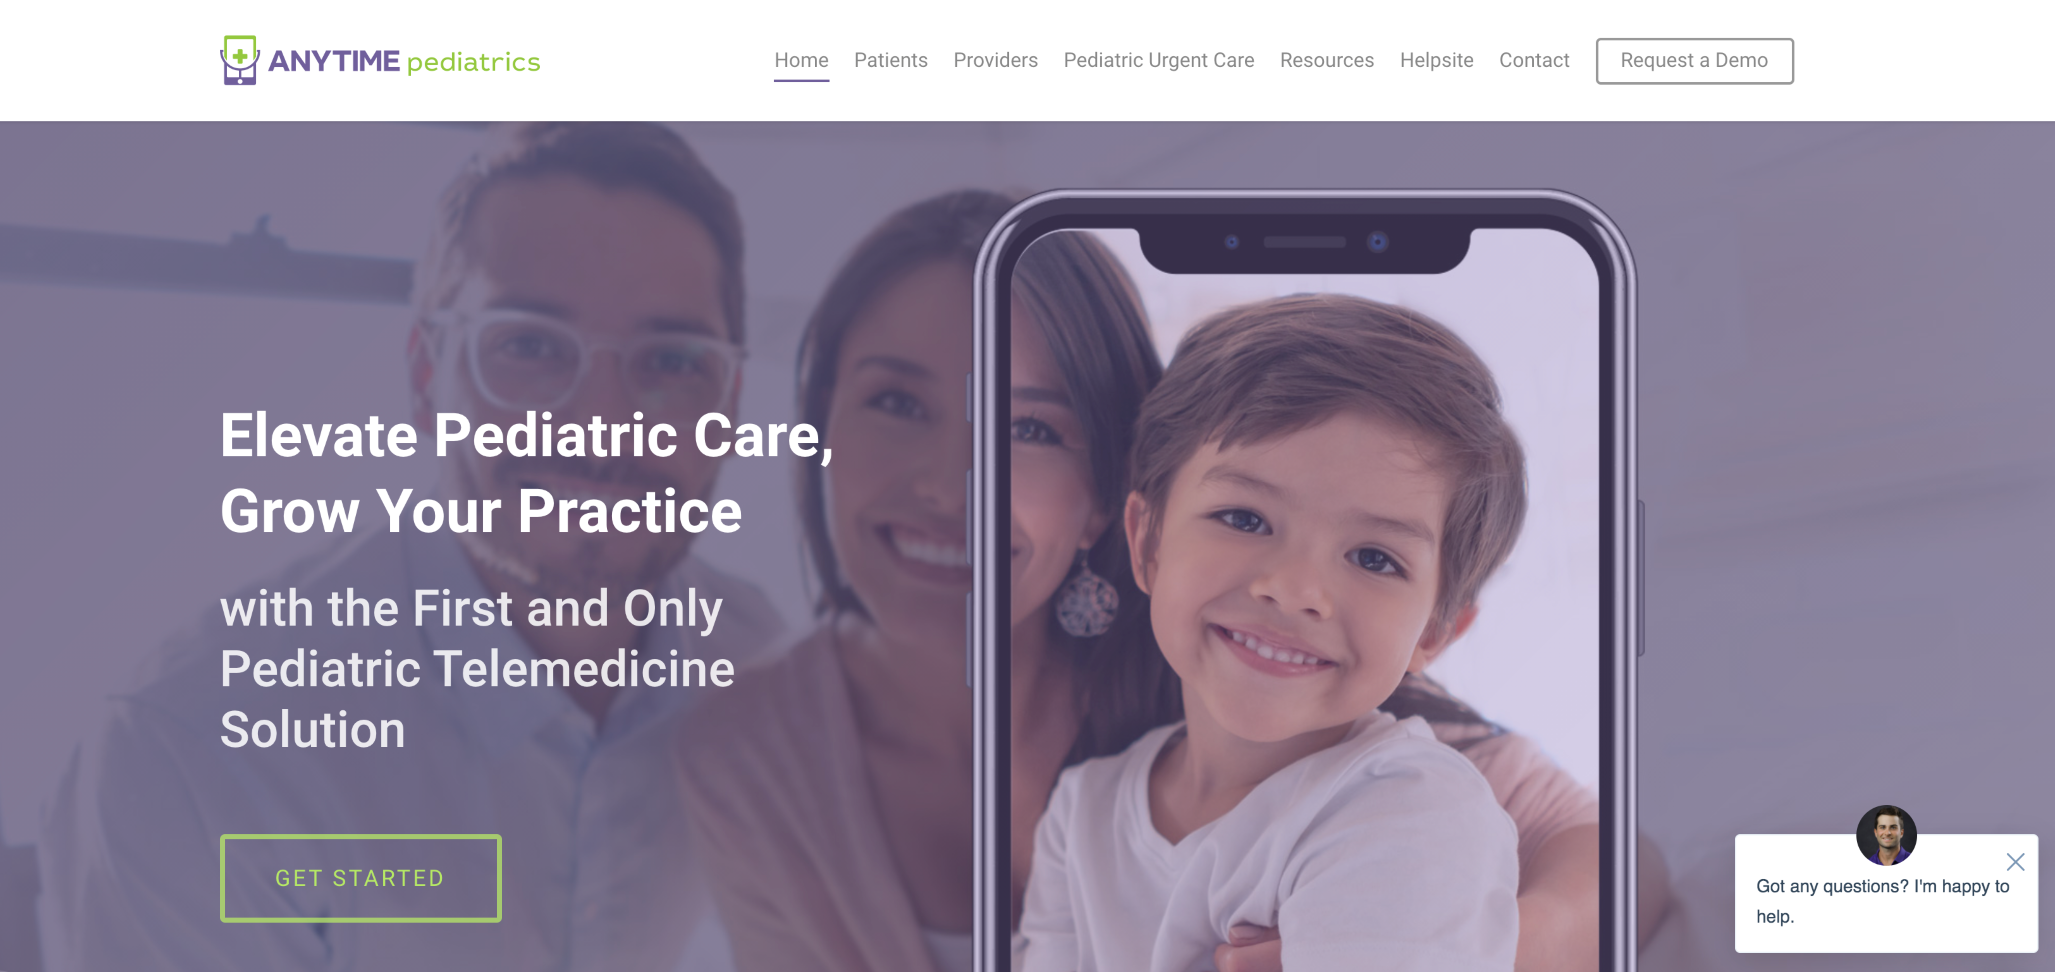 AnytimePediatrics online doctor service for children